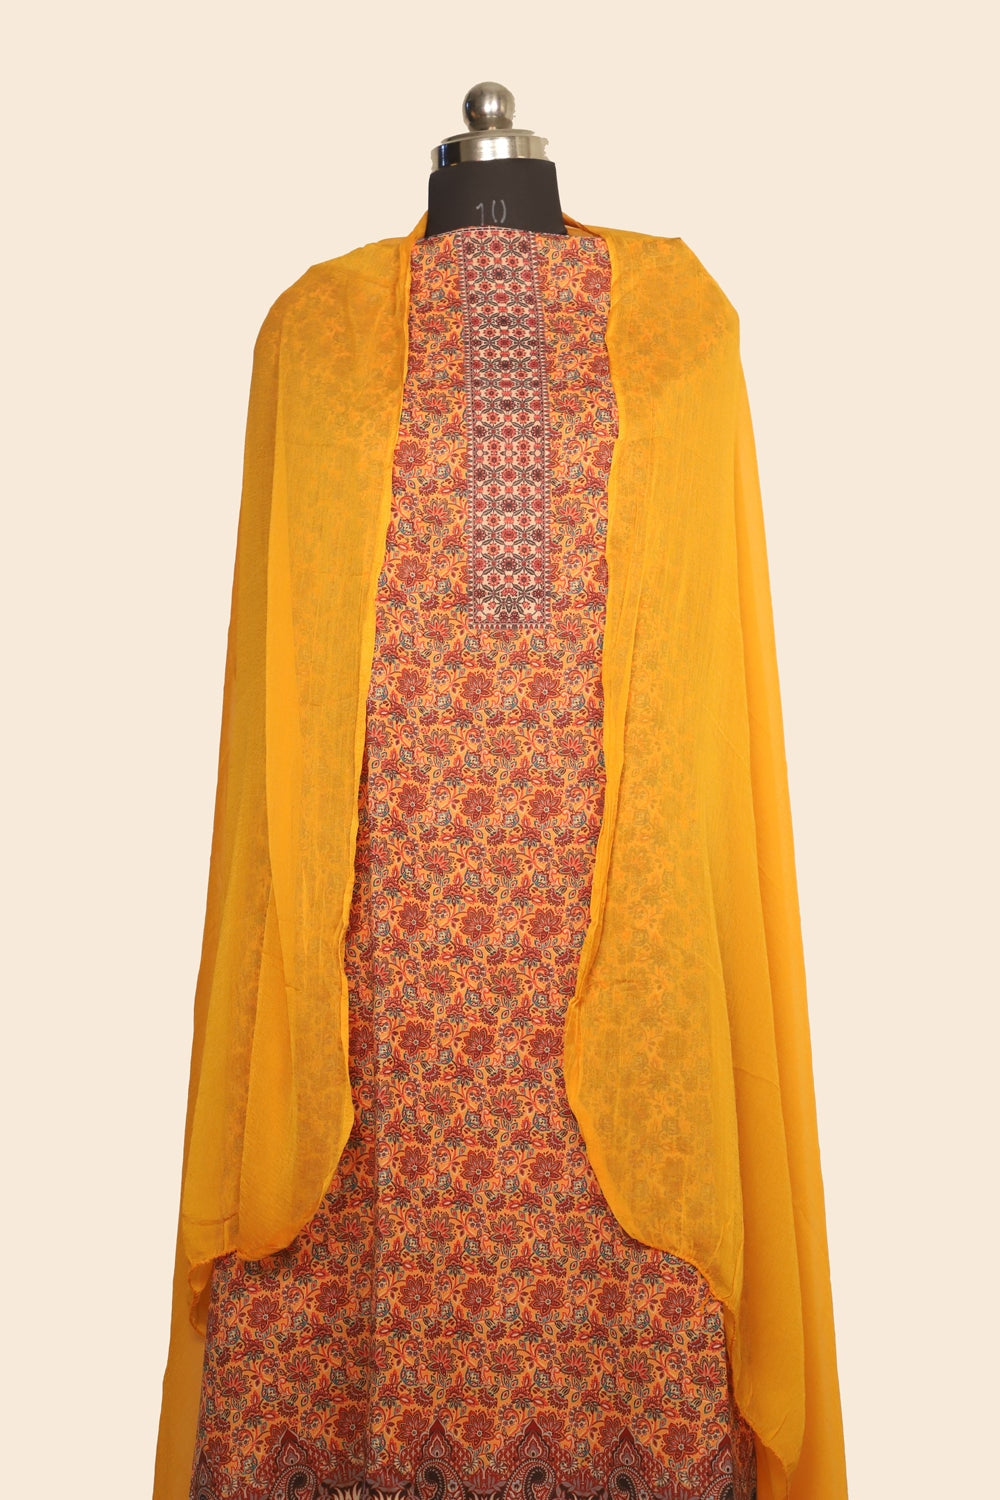 Mustard Yellow Colour Cotton Kani Printer Unstitched Suit